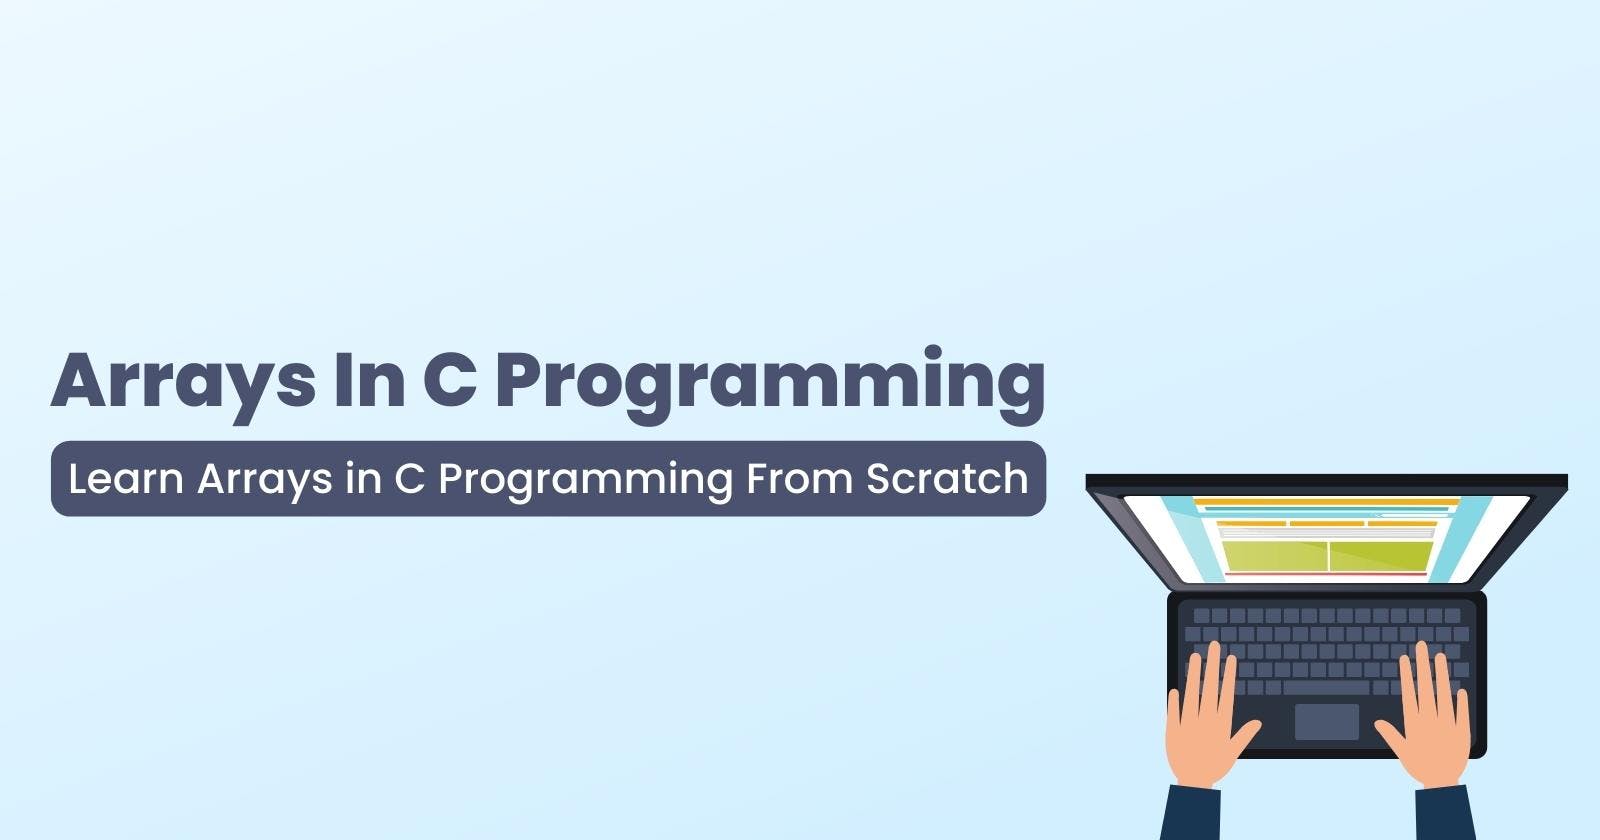 Arrays in C Programming: A Beginner's Guide